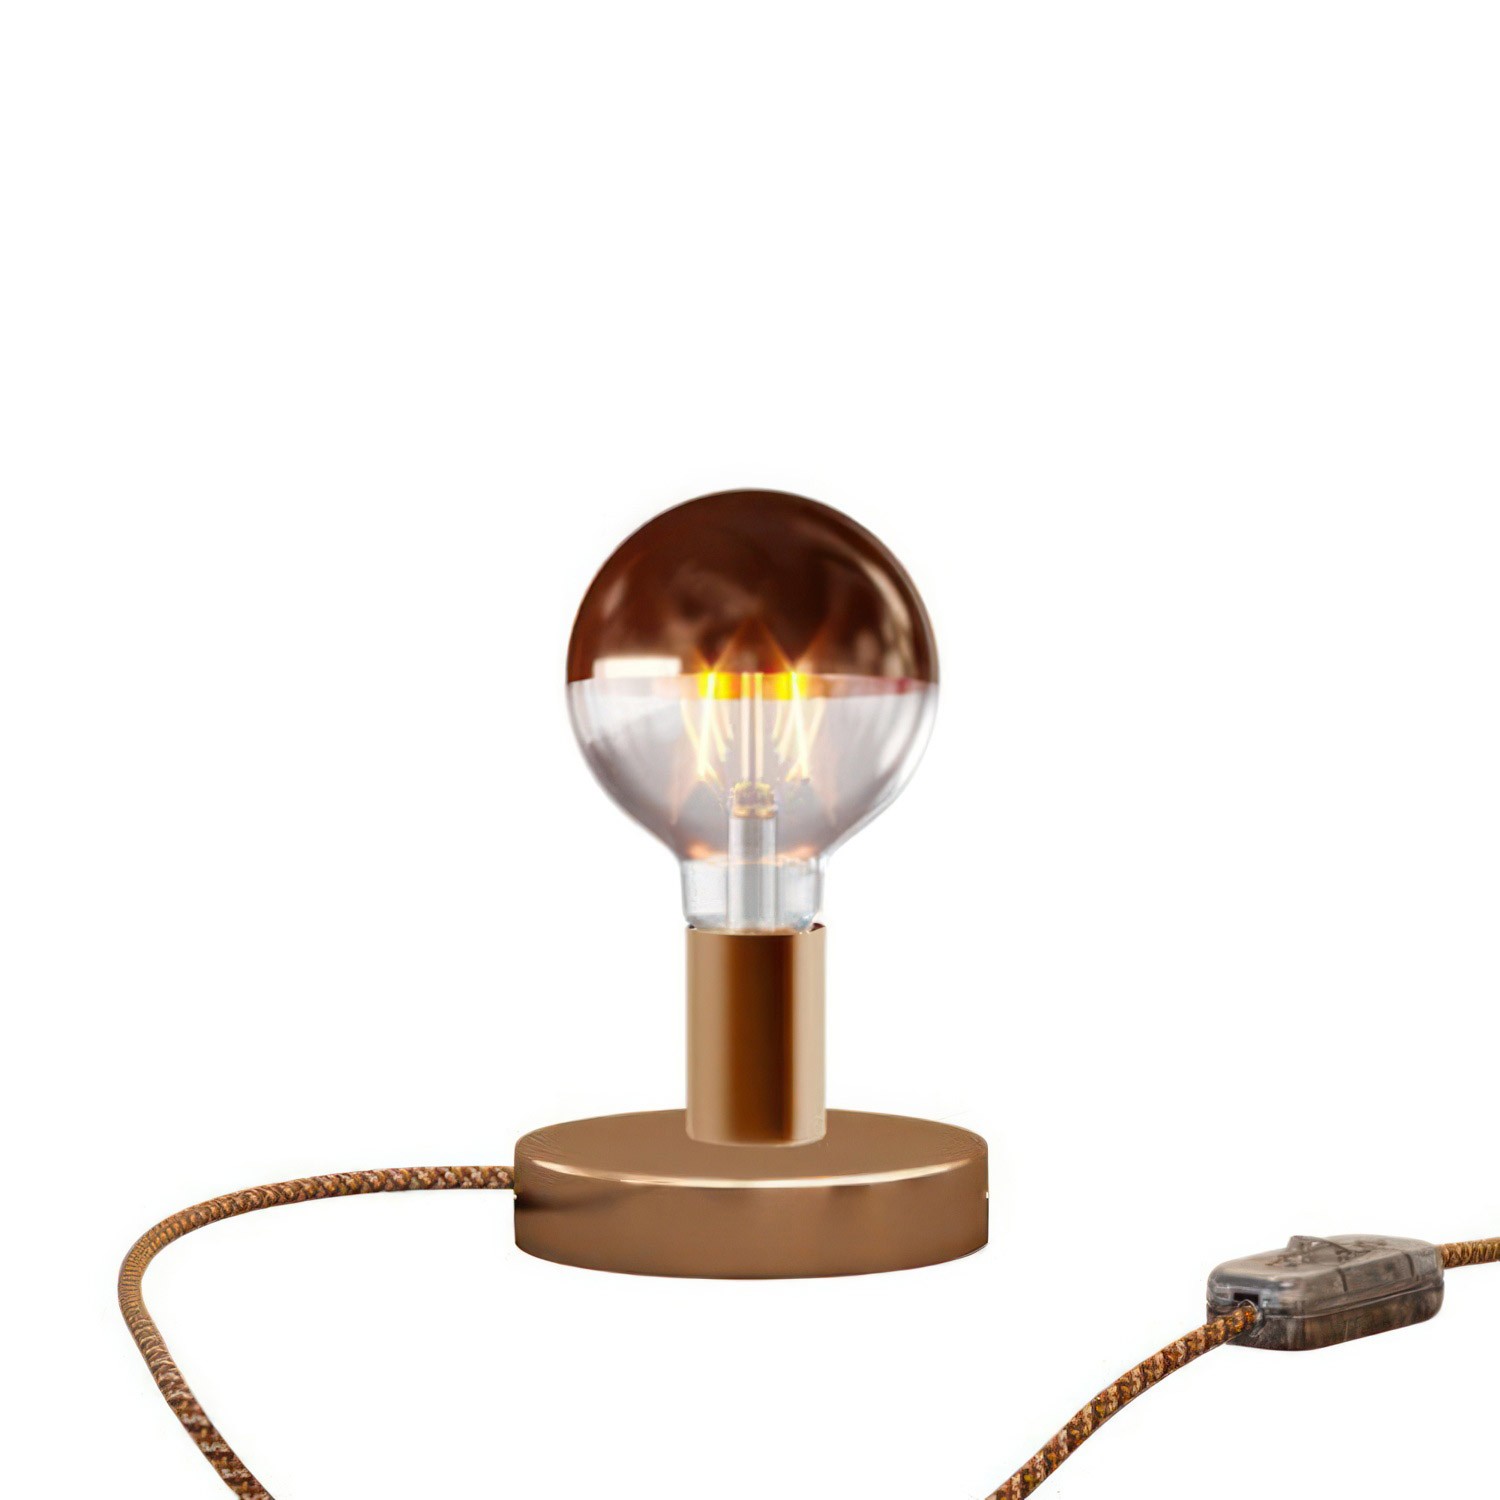 Lampe de table Posaluce Half Cup en métal